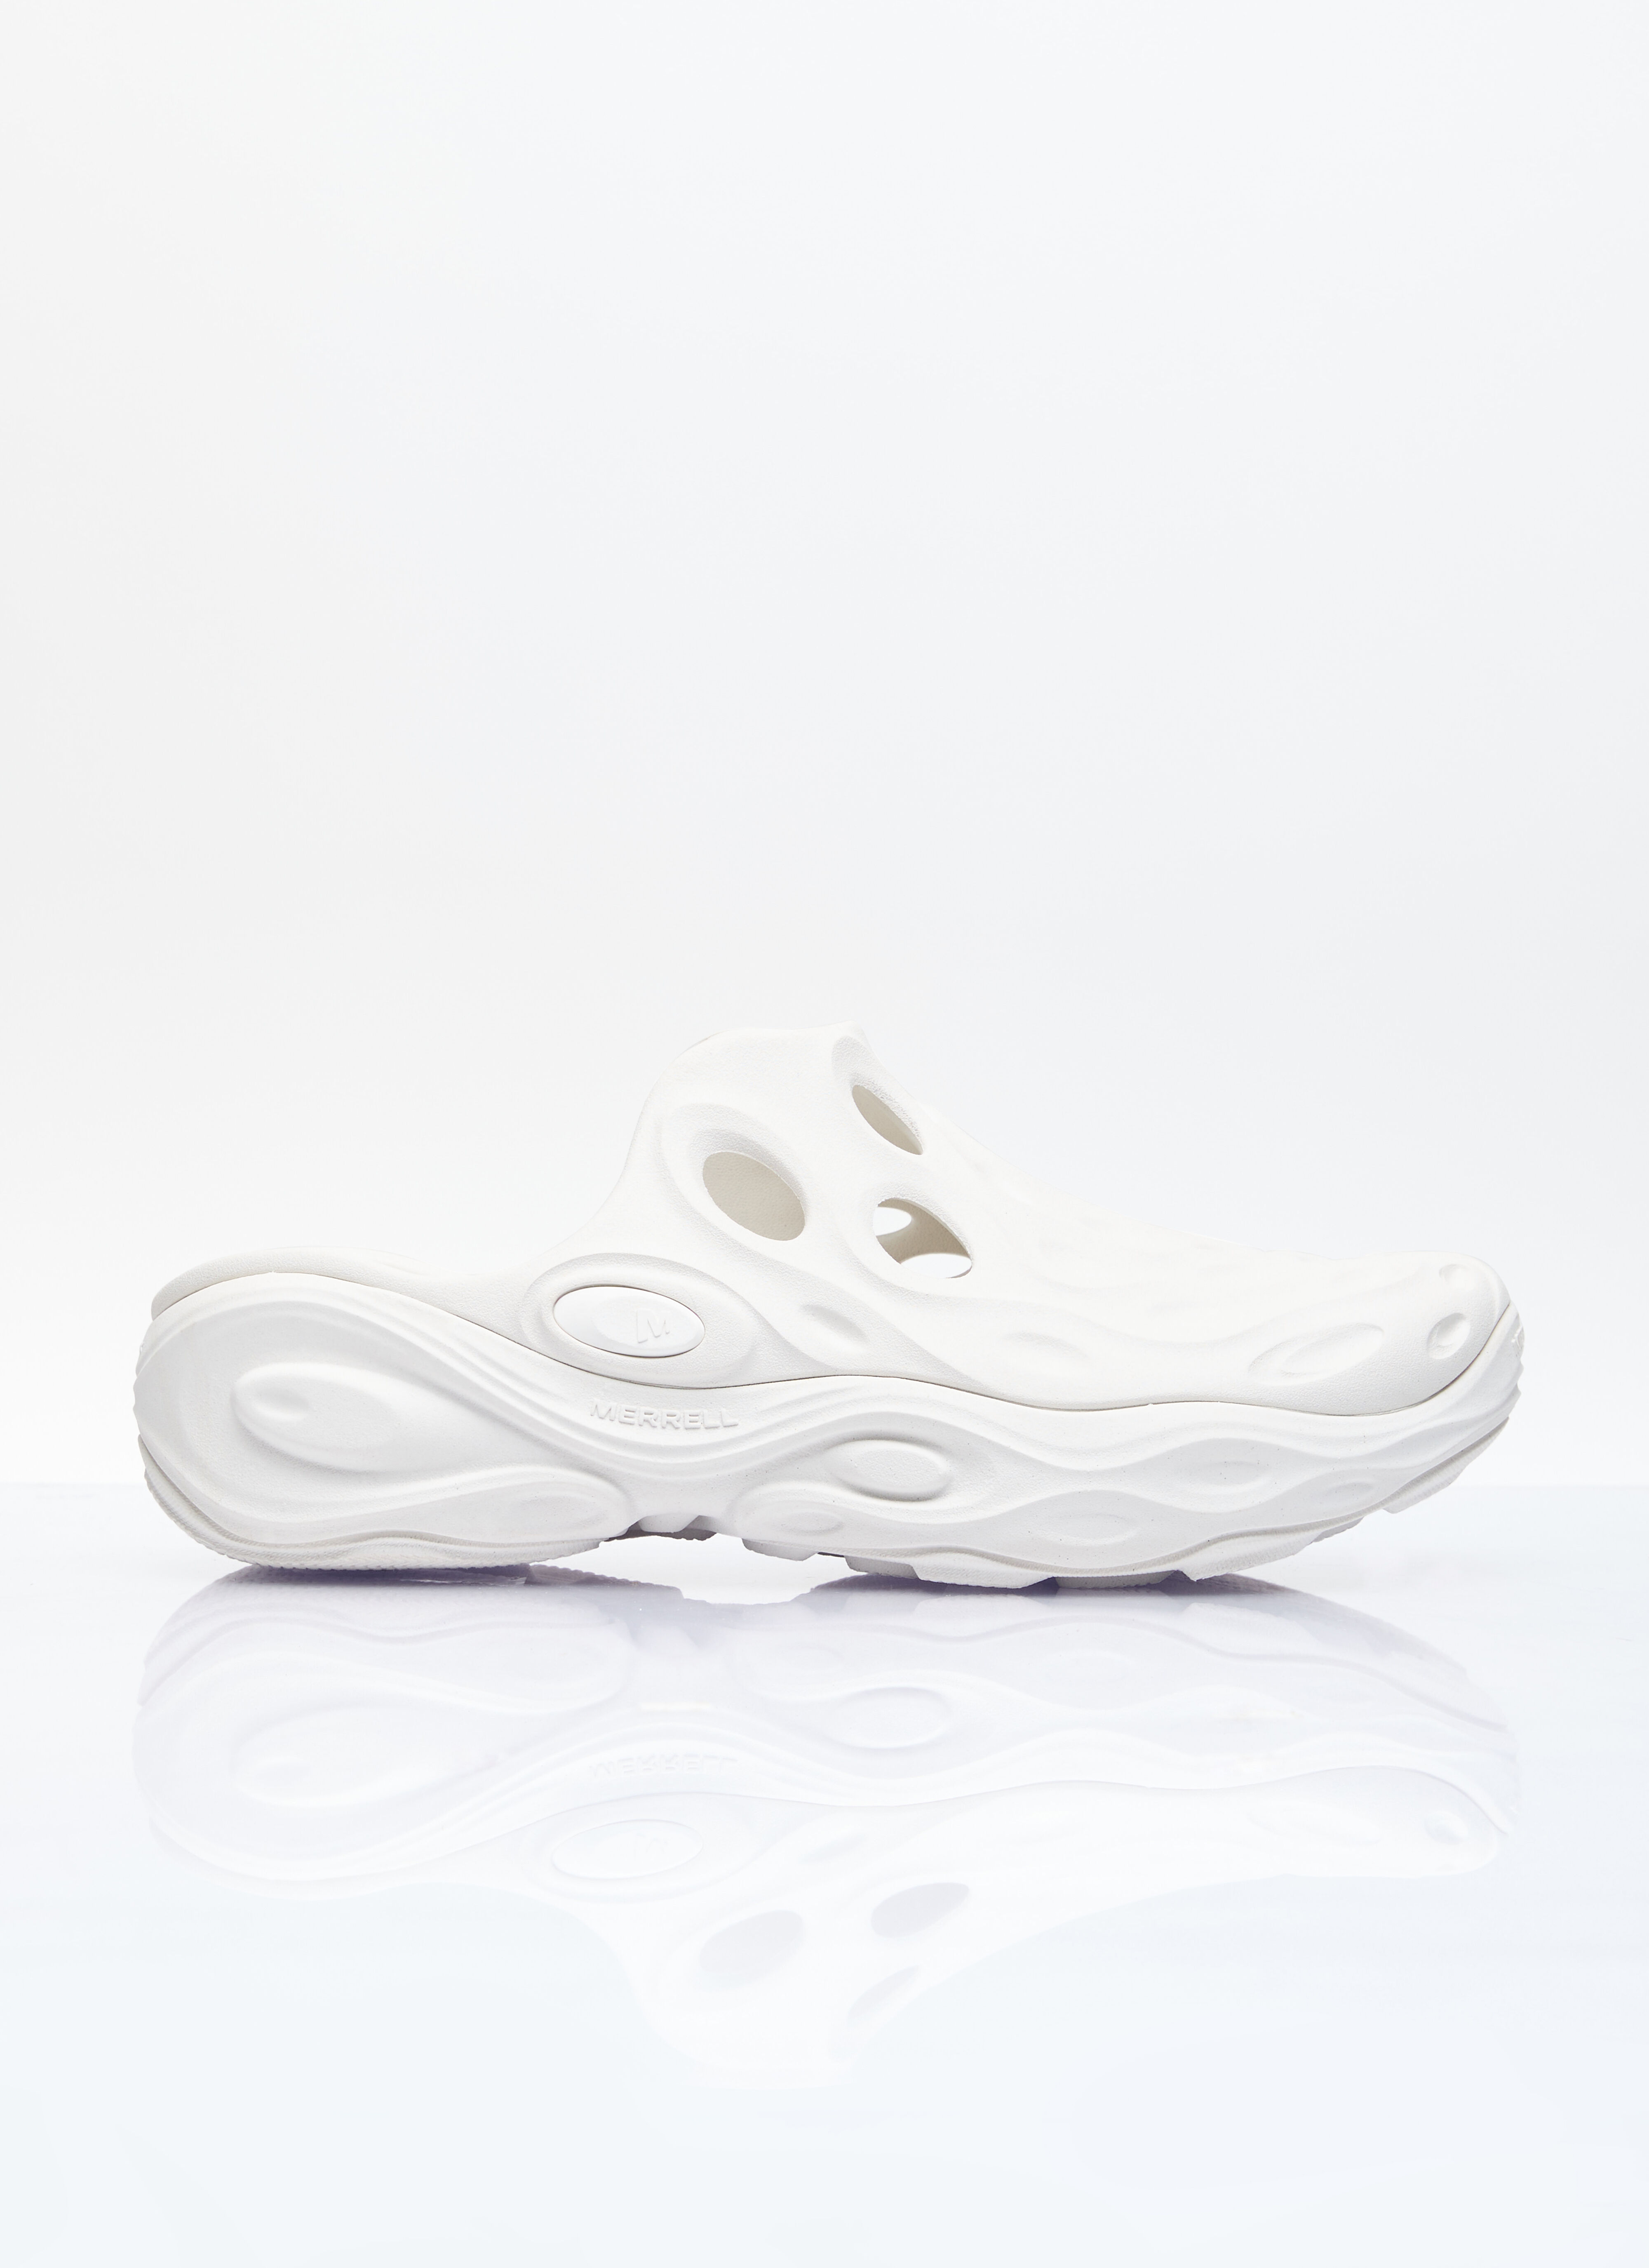 Oakley Factory Team Hydro Next Gen Slip On Shoes White oft0156002